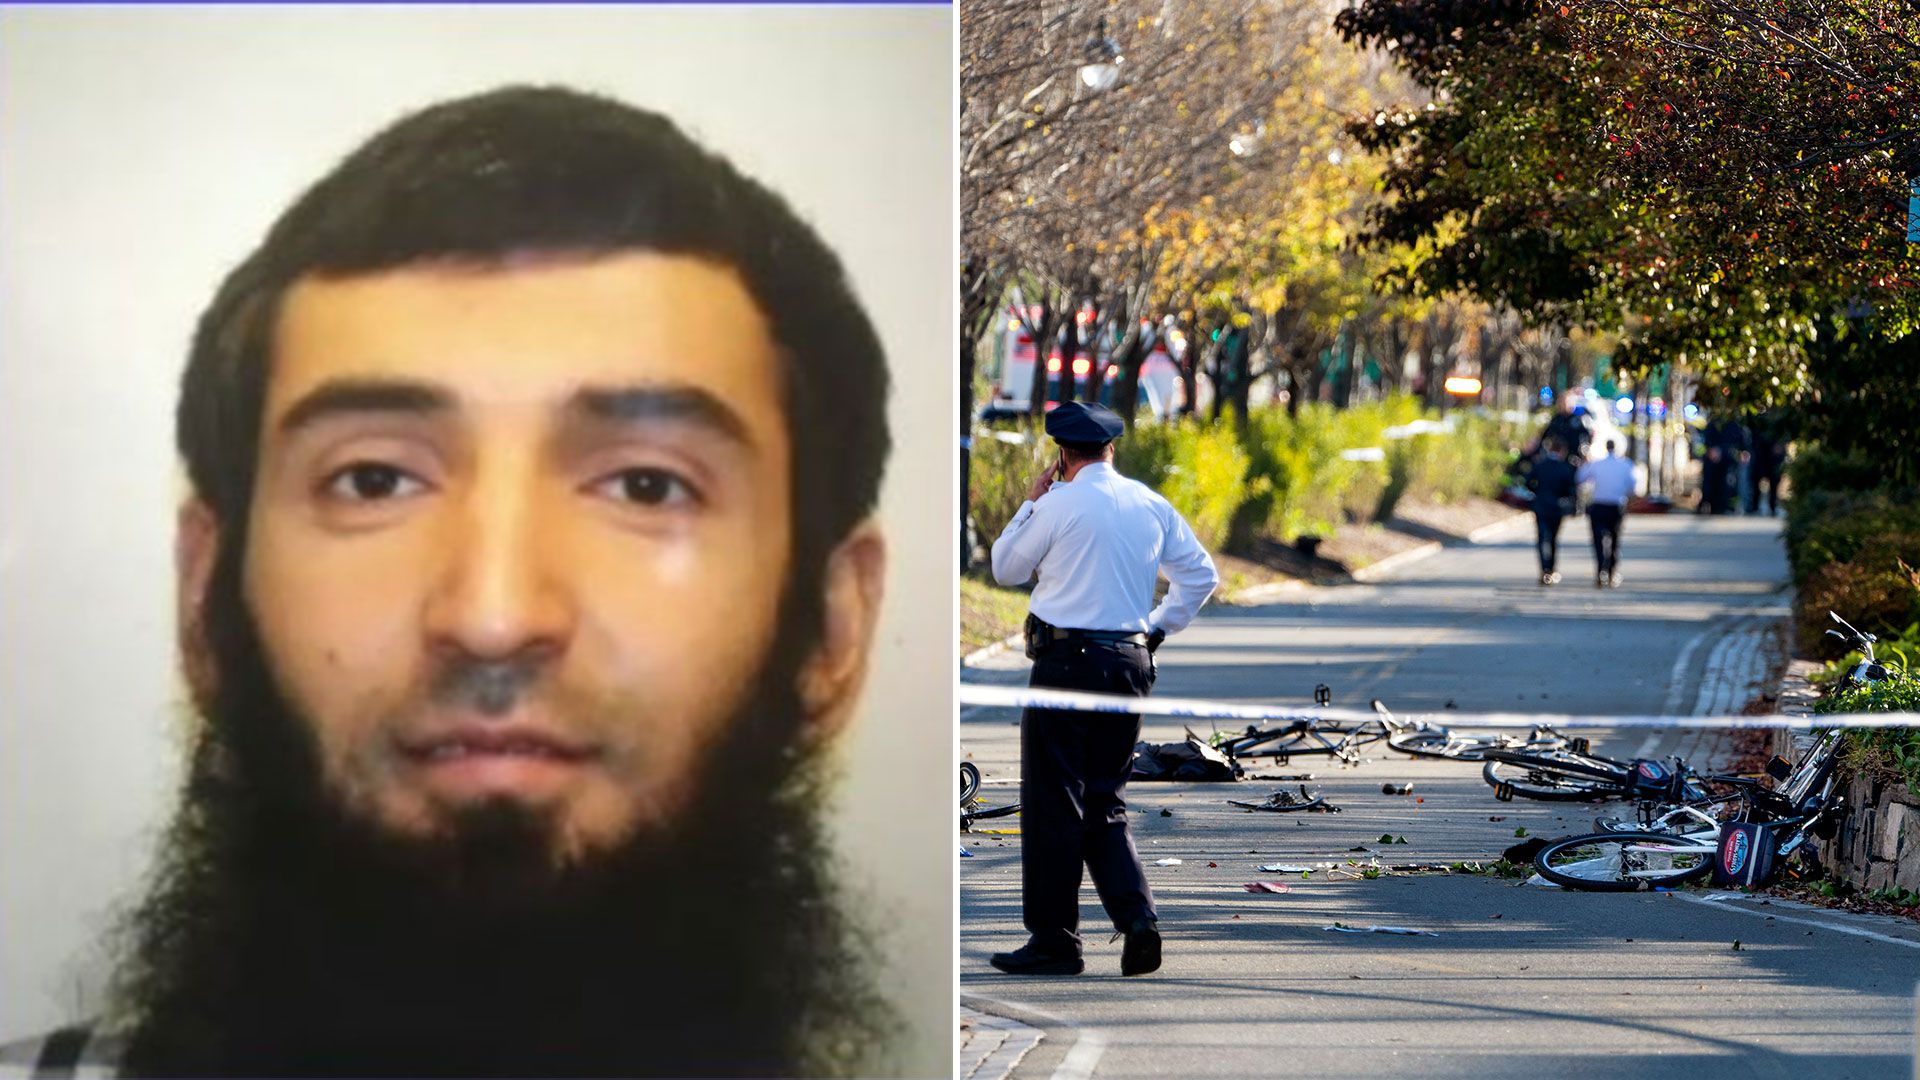 El terrorista Sayfullah Habibullahevic Saipov, el conductor que mató a ocho personas e hirió a otras doce.